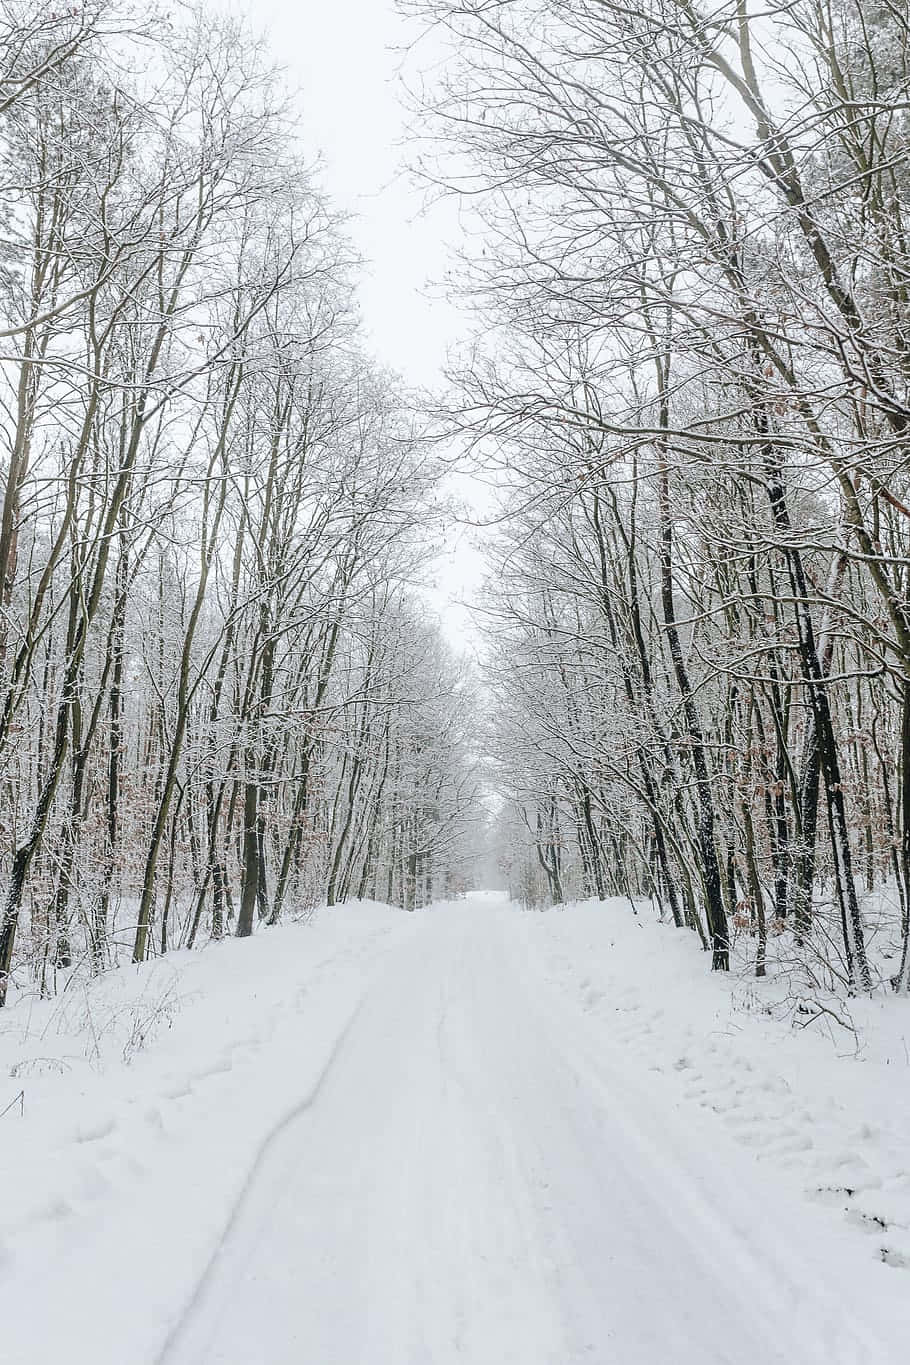 Snowy Road through a Scenic Winter Wonderland Wallpaper